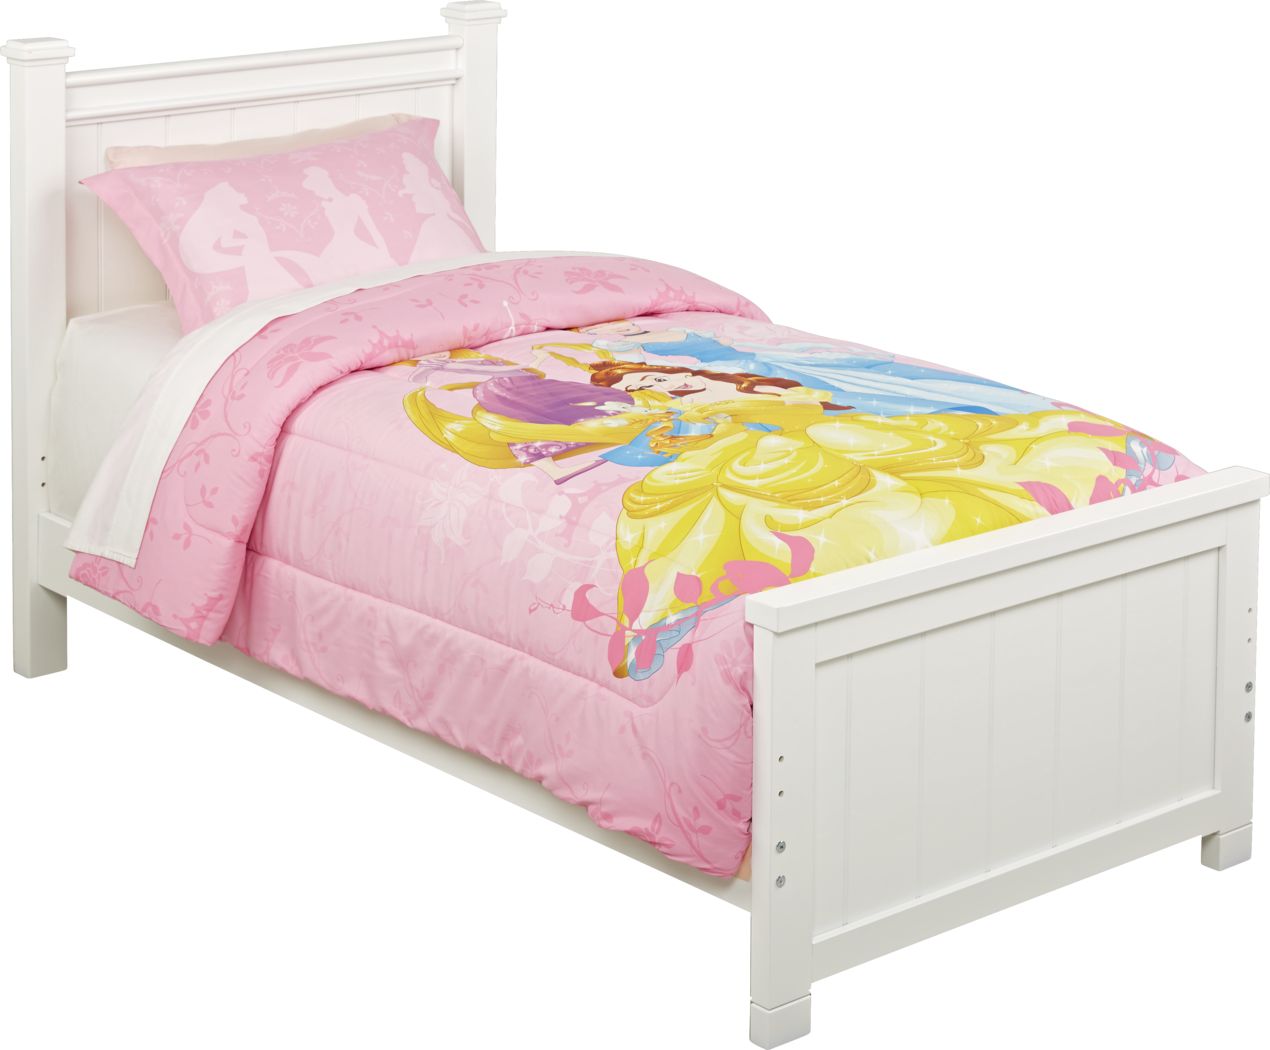 Disney Princess Bedroom Set For, Twin Size Princess Bedroom Set